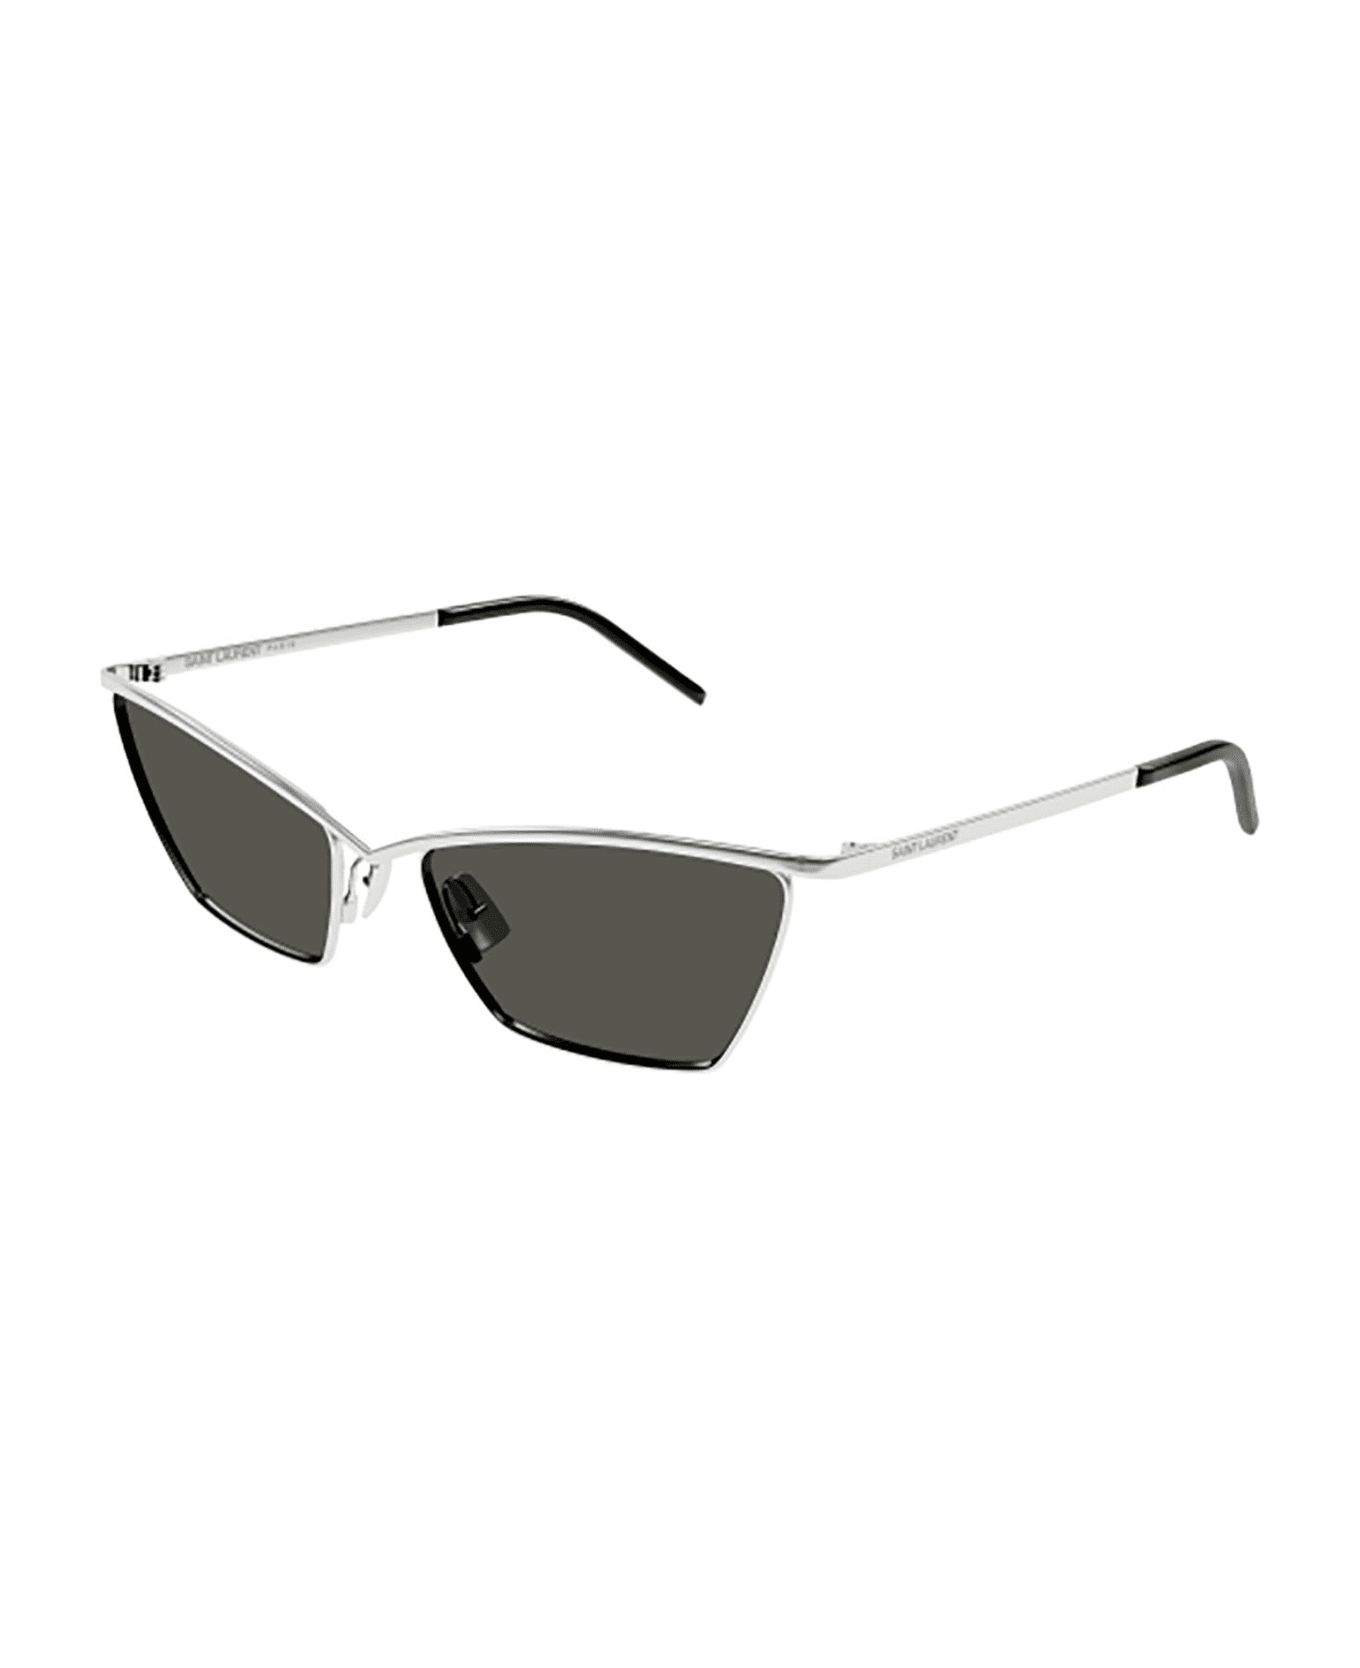 Saint Laurent Eyewear SL 637 Sunglasses - Silver Silver Grey サングラス